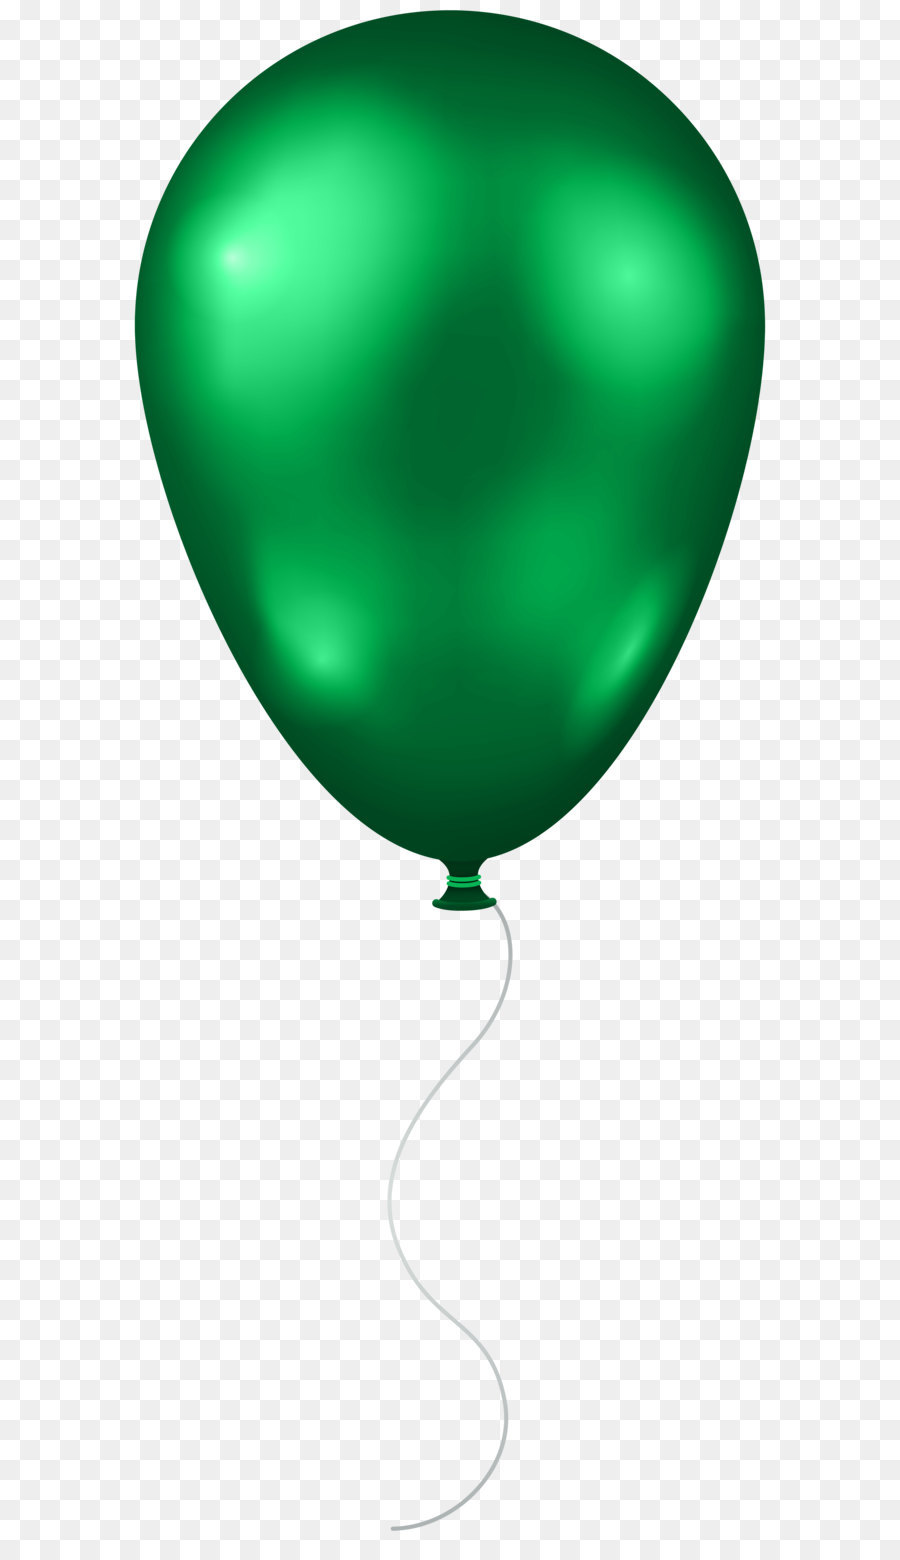 Green Balloon Symbol - Green Balloon Transparent PNG Clip Art Image png download - 3375*8000 - Free Transparent Green png Download.